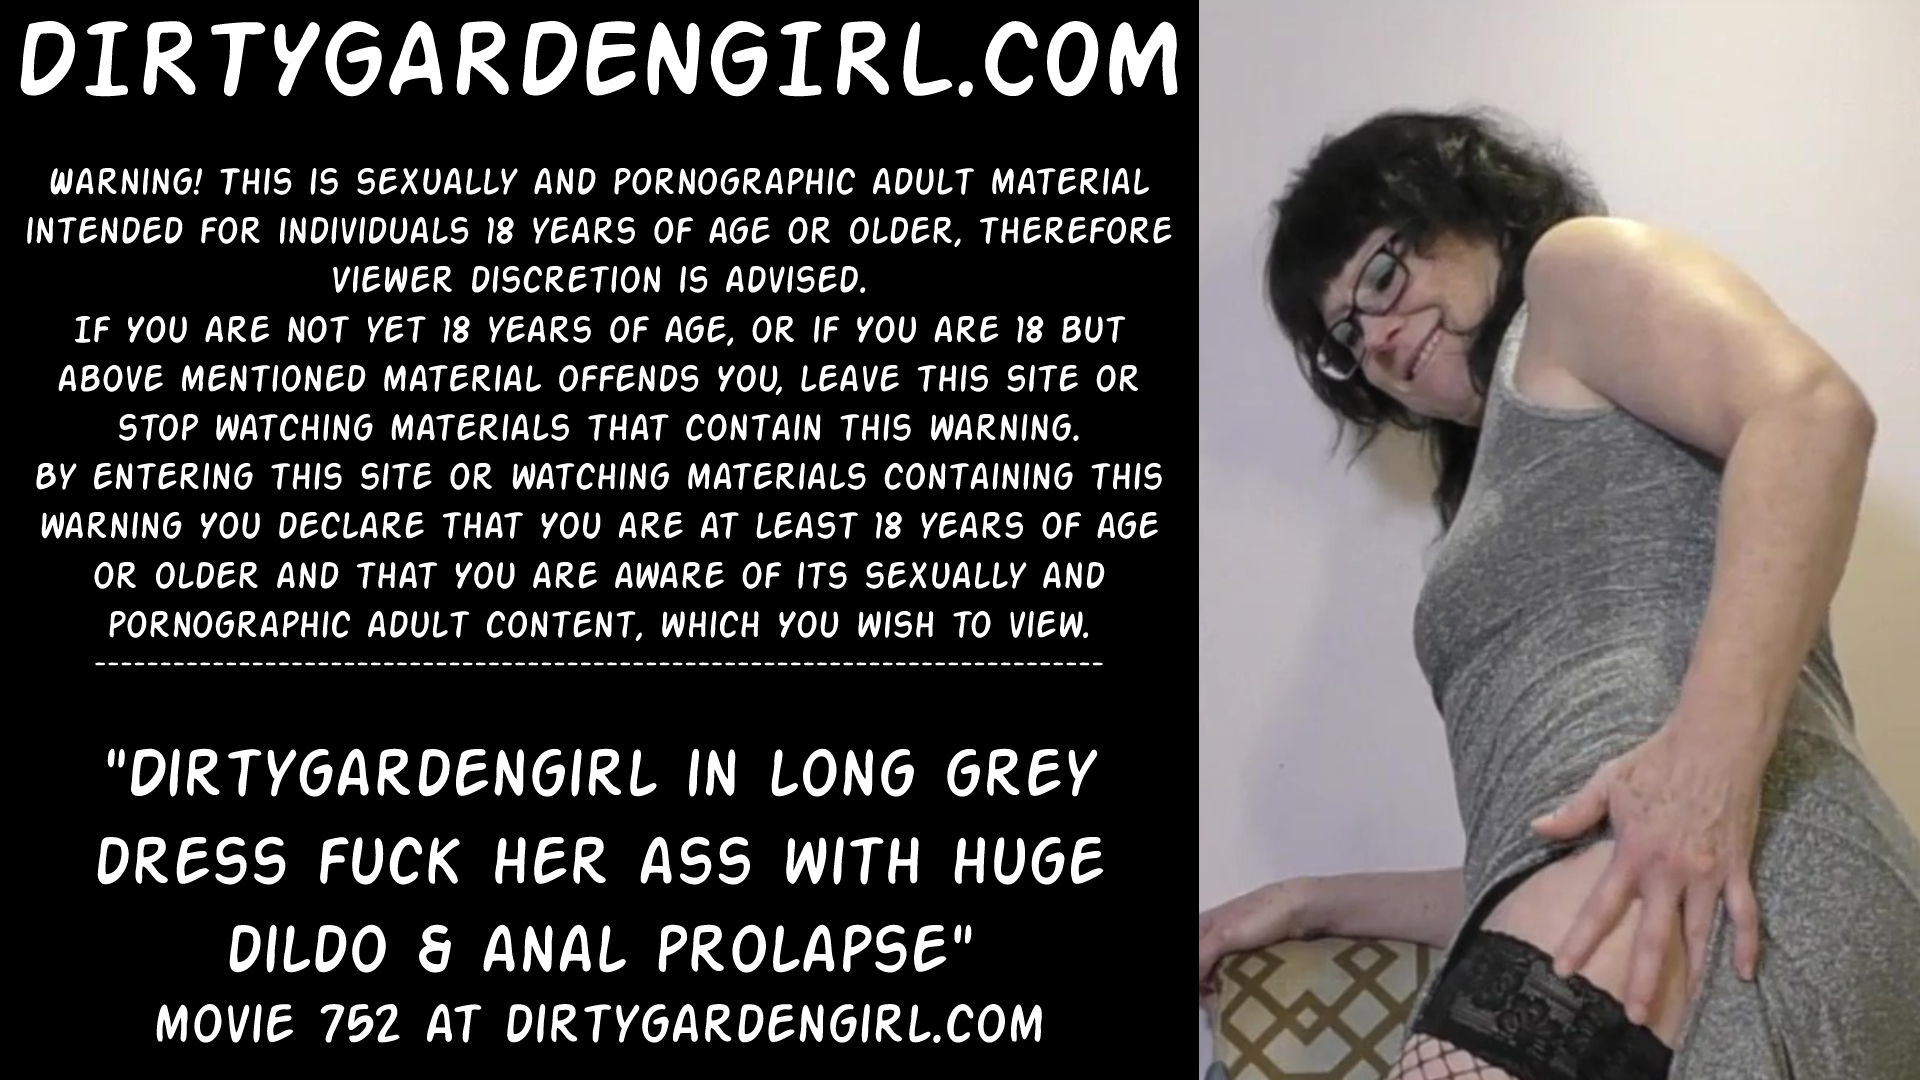 Dirtygardengirl grey dress fuck anal dildo & prolapse